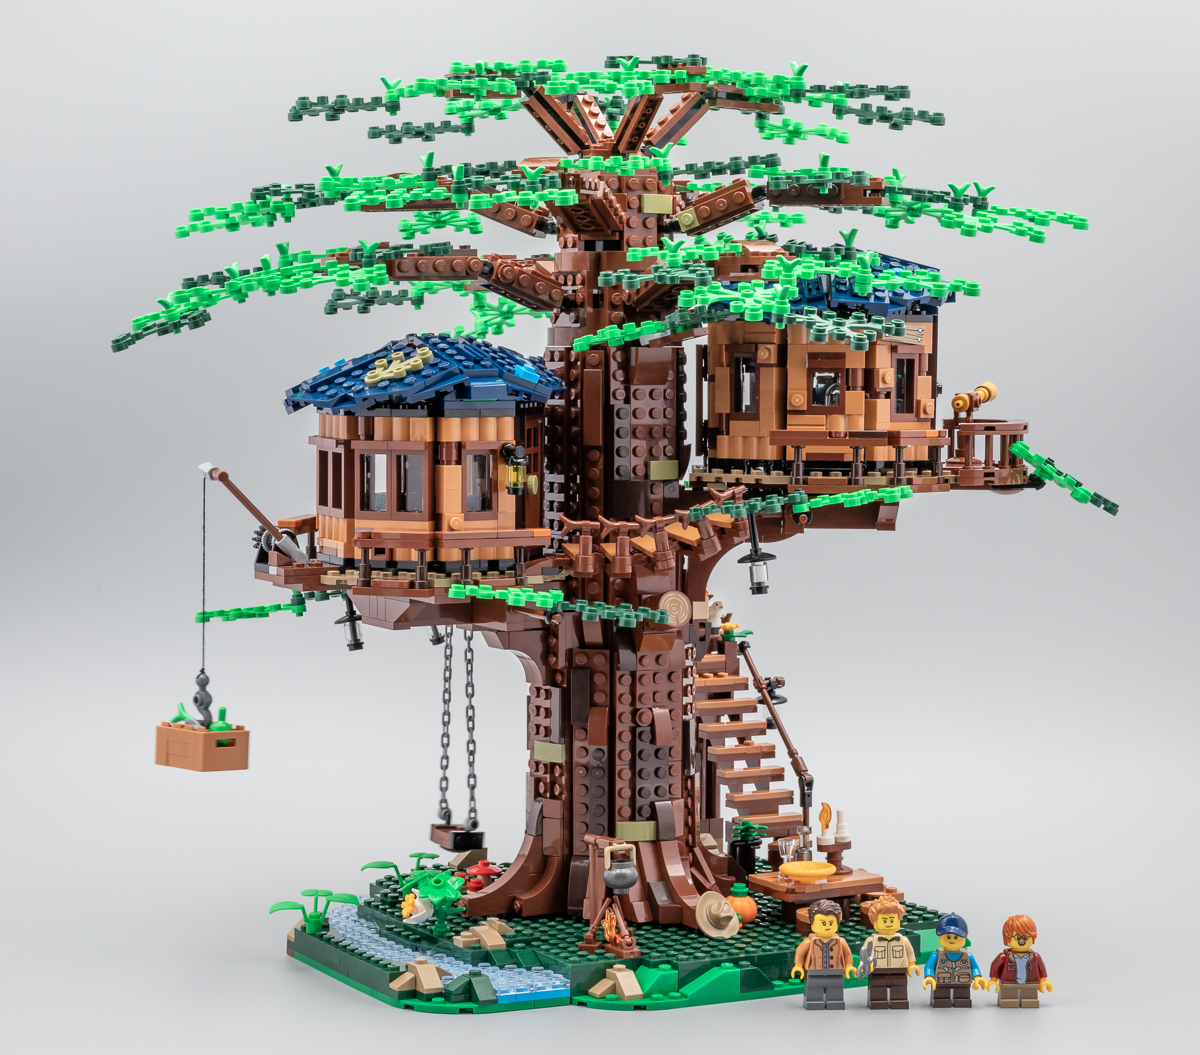 arbres lego